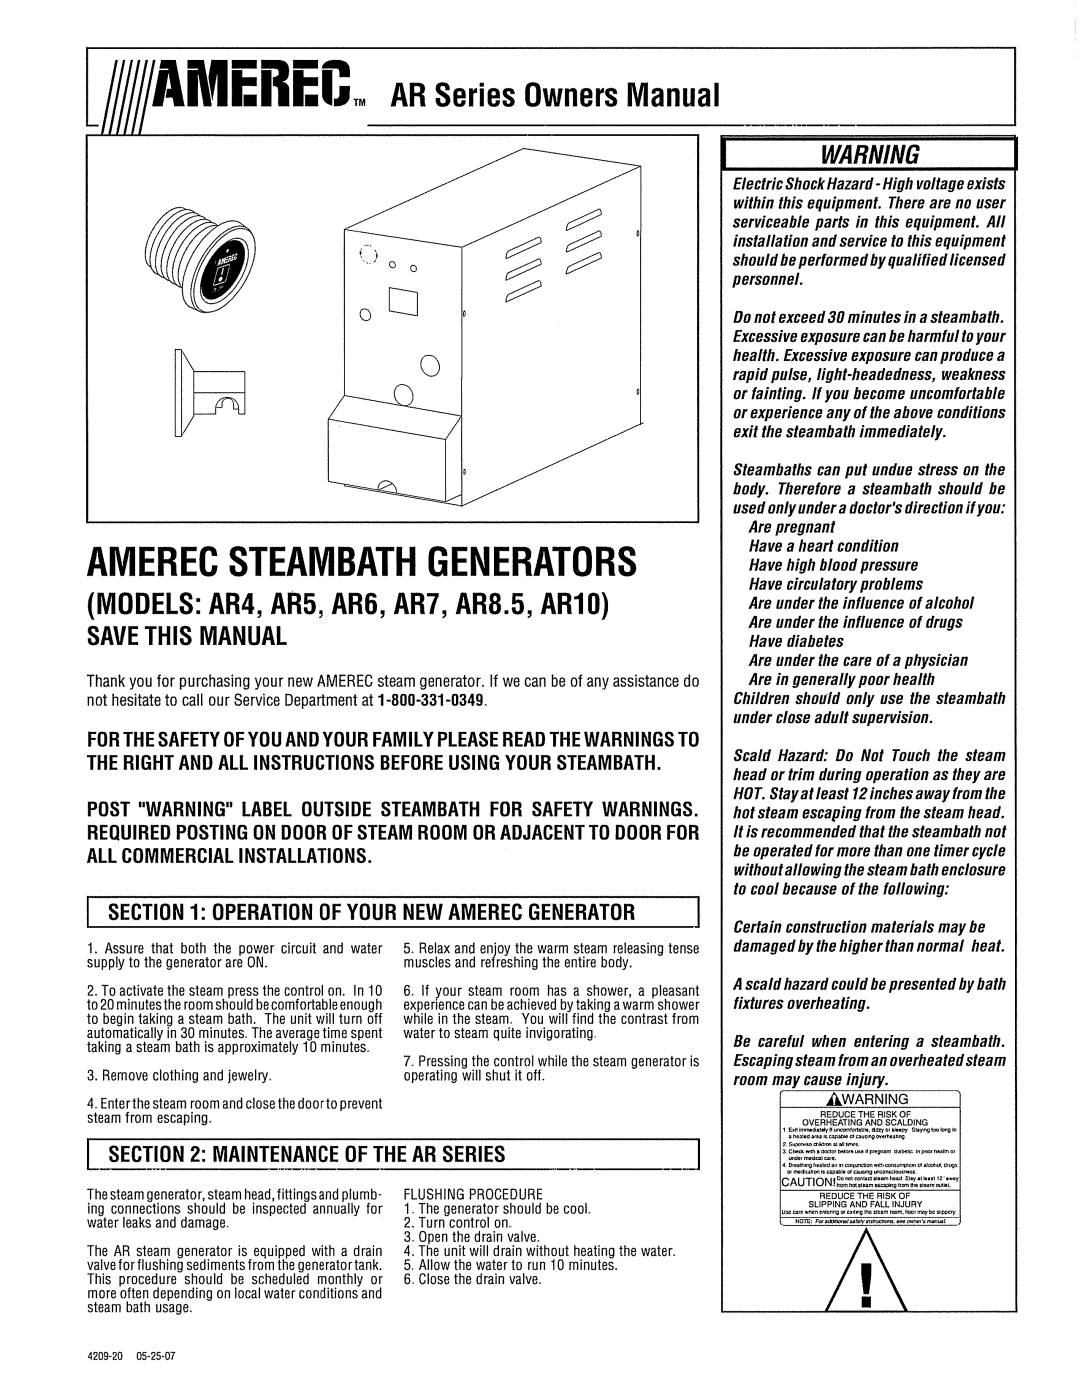 Amerec AR Series manual 